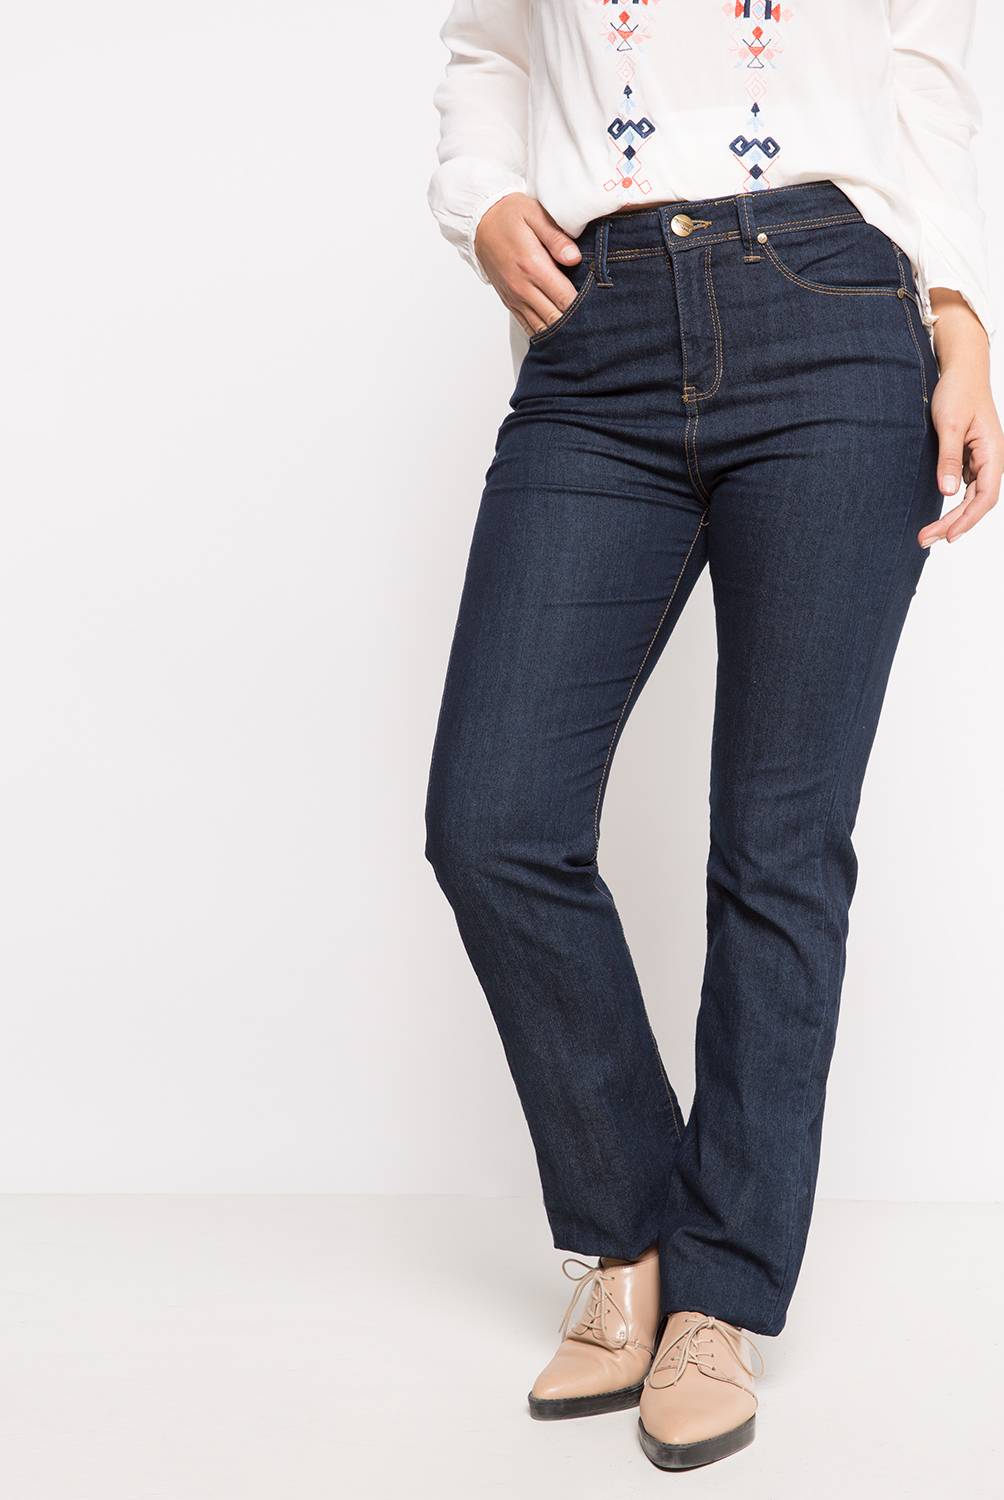 NEWPORT - Newport Jeans Denim Recto Tiro Alto Mujer